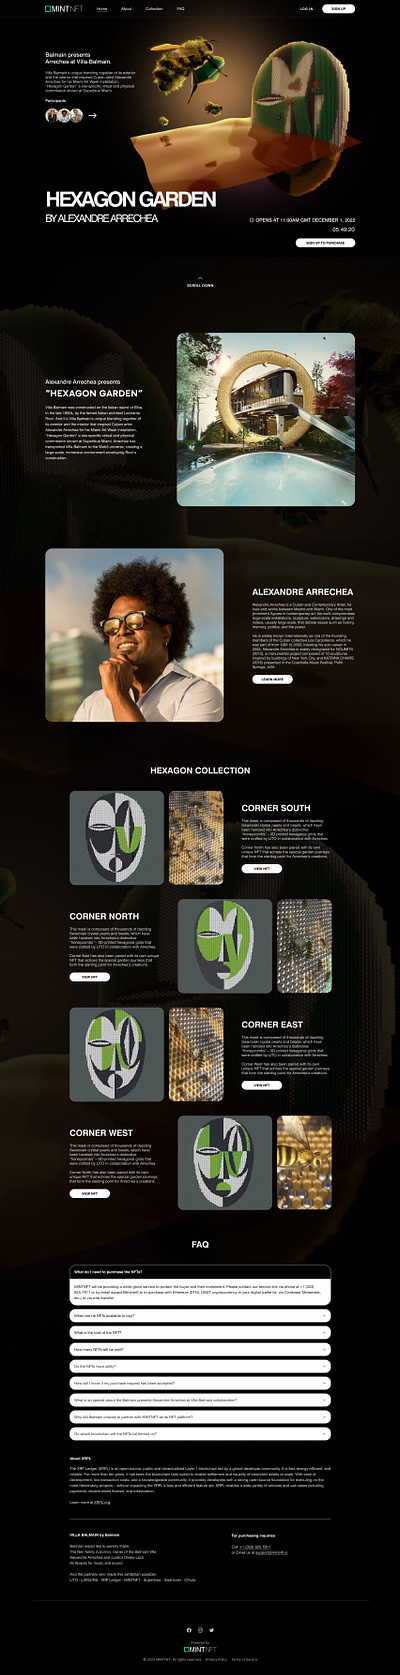 Landing page for the Hexagon Garden by Alexandre Arrechea 3d graphic design ui web